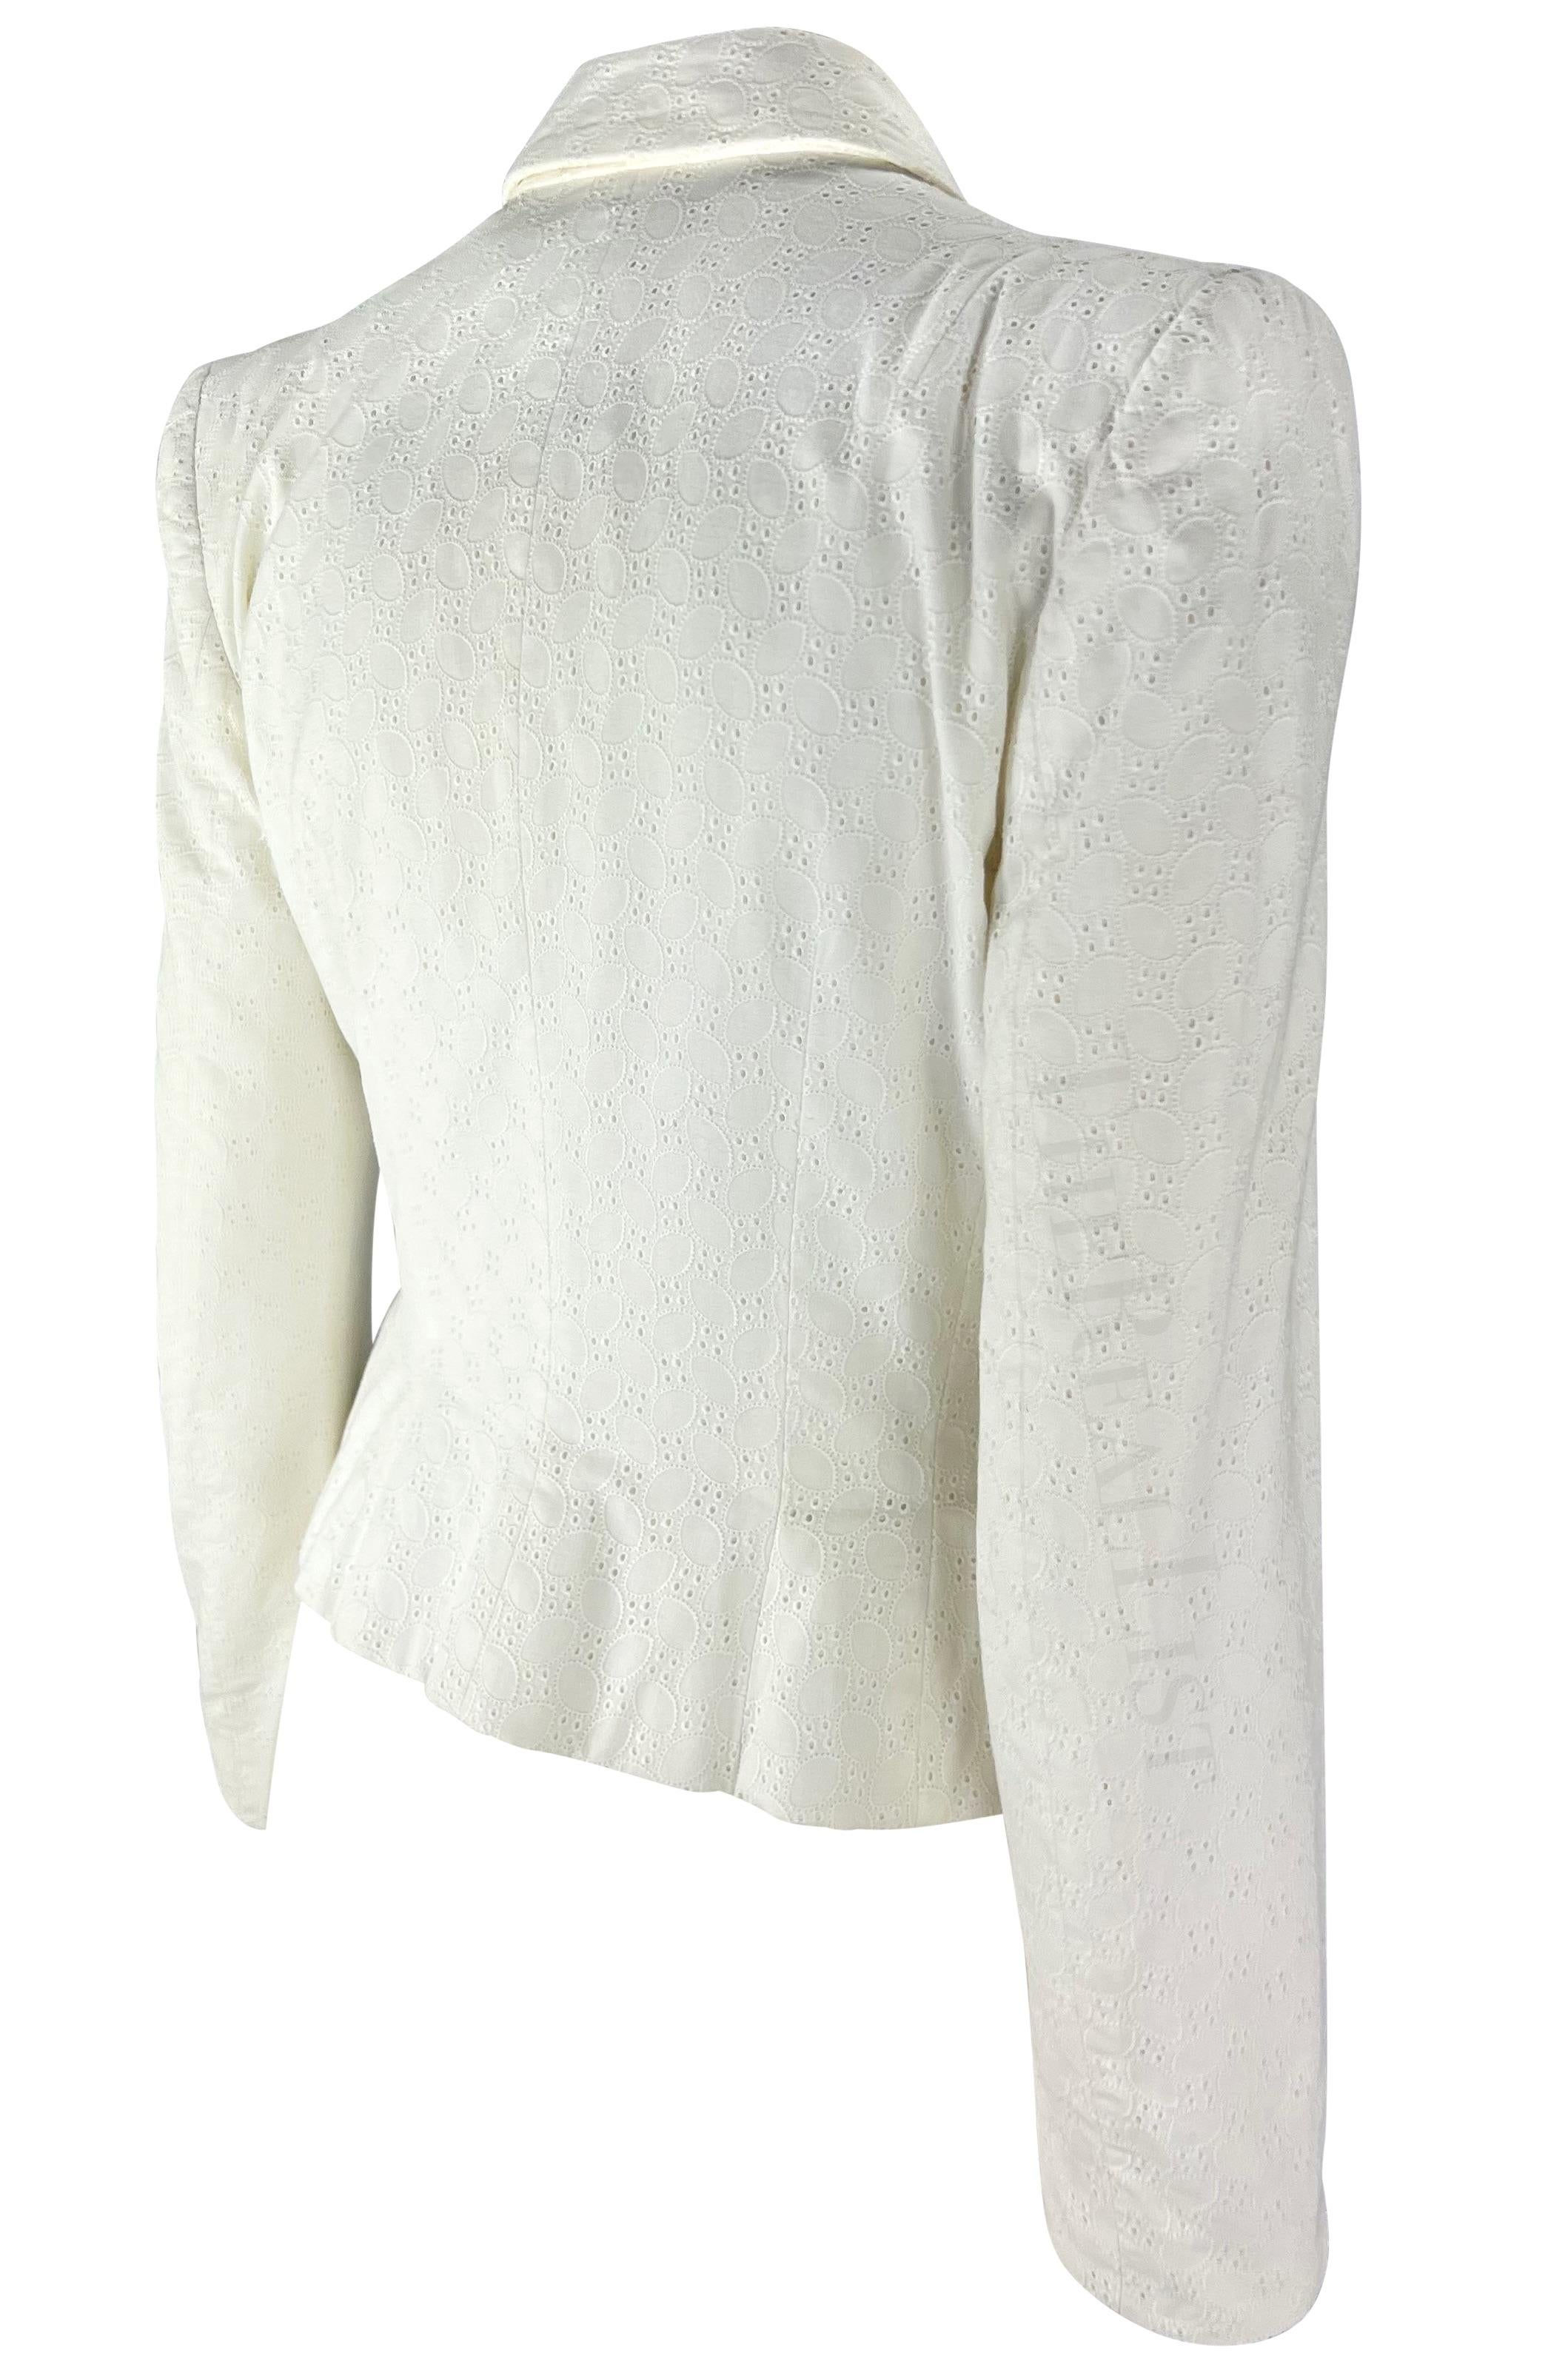 S/S 1996 John Galliano Paris Broderie Anglaise Ballet Peplum White Jacket Blazer For Sale 2